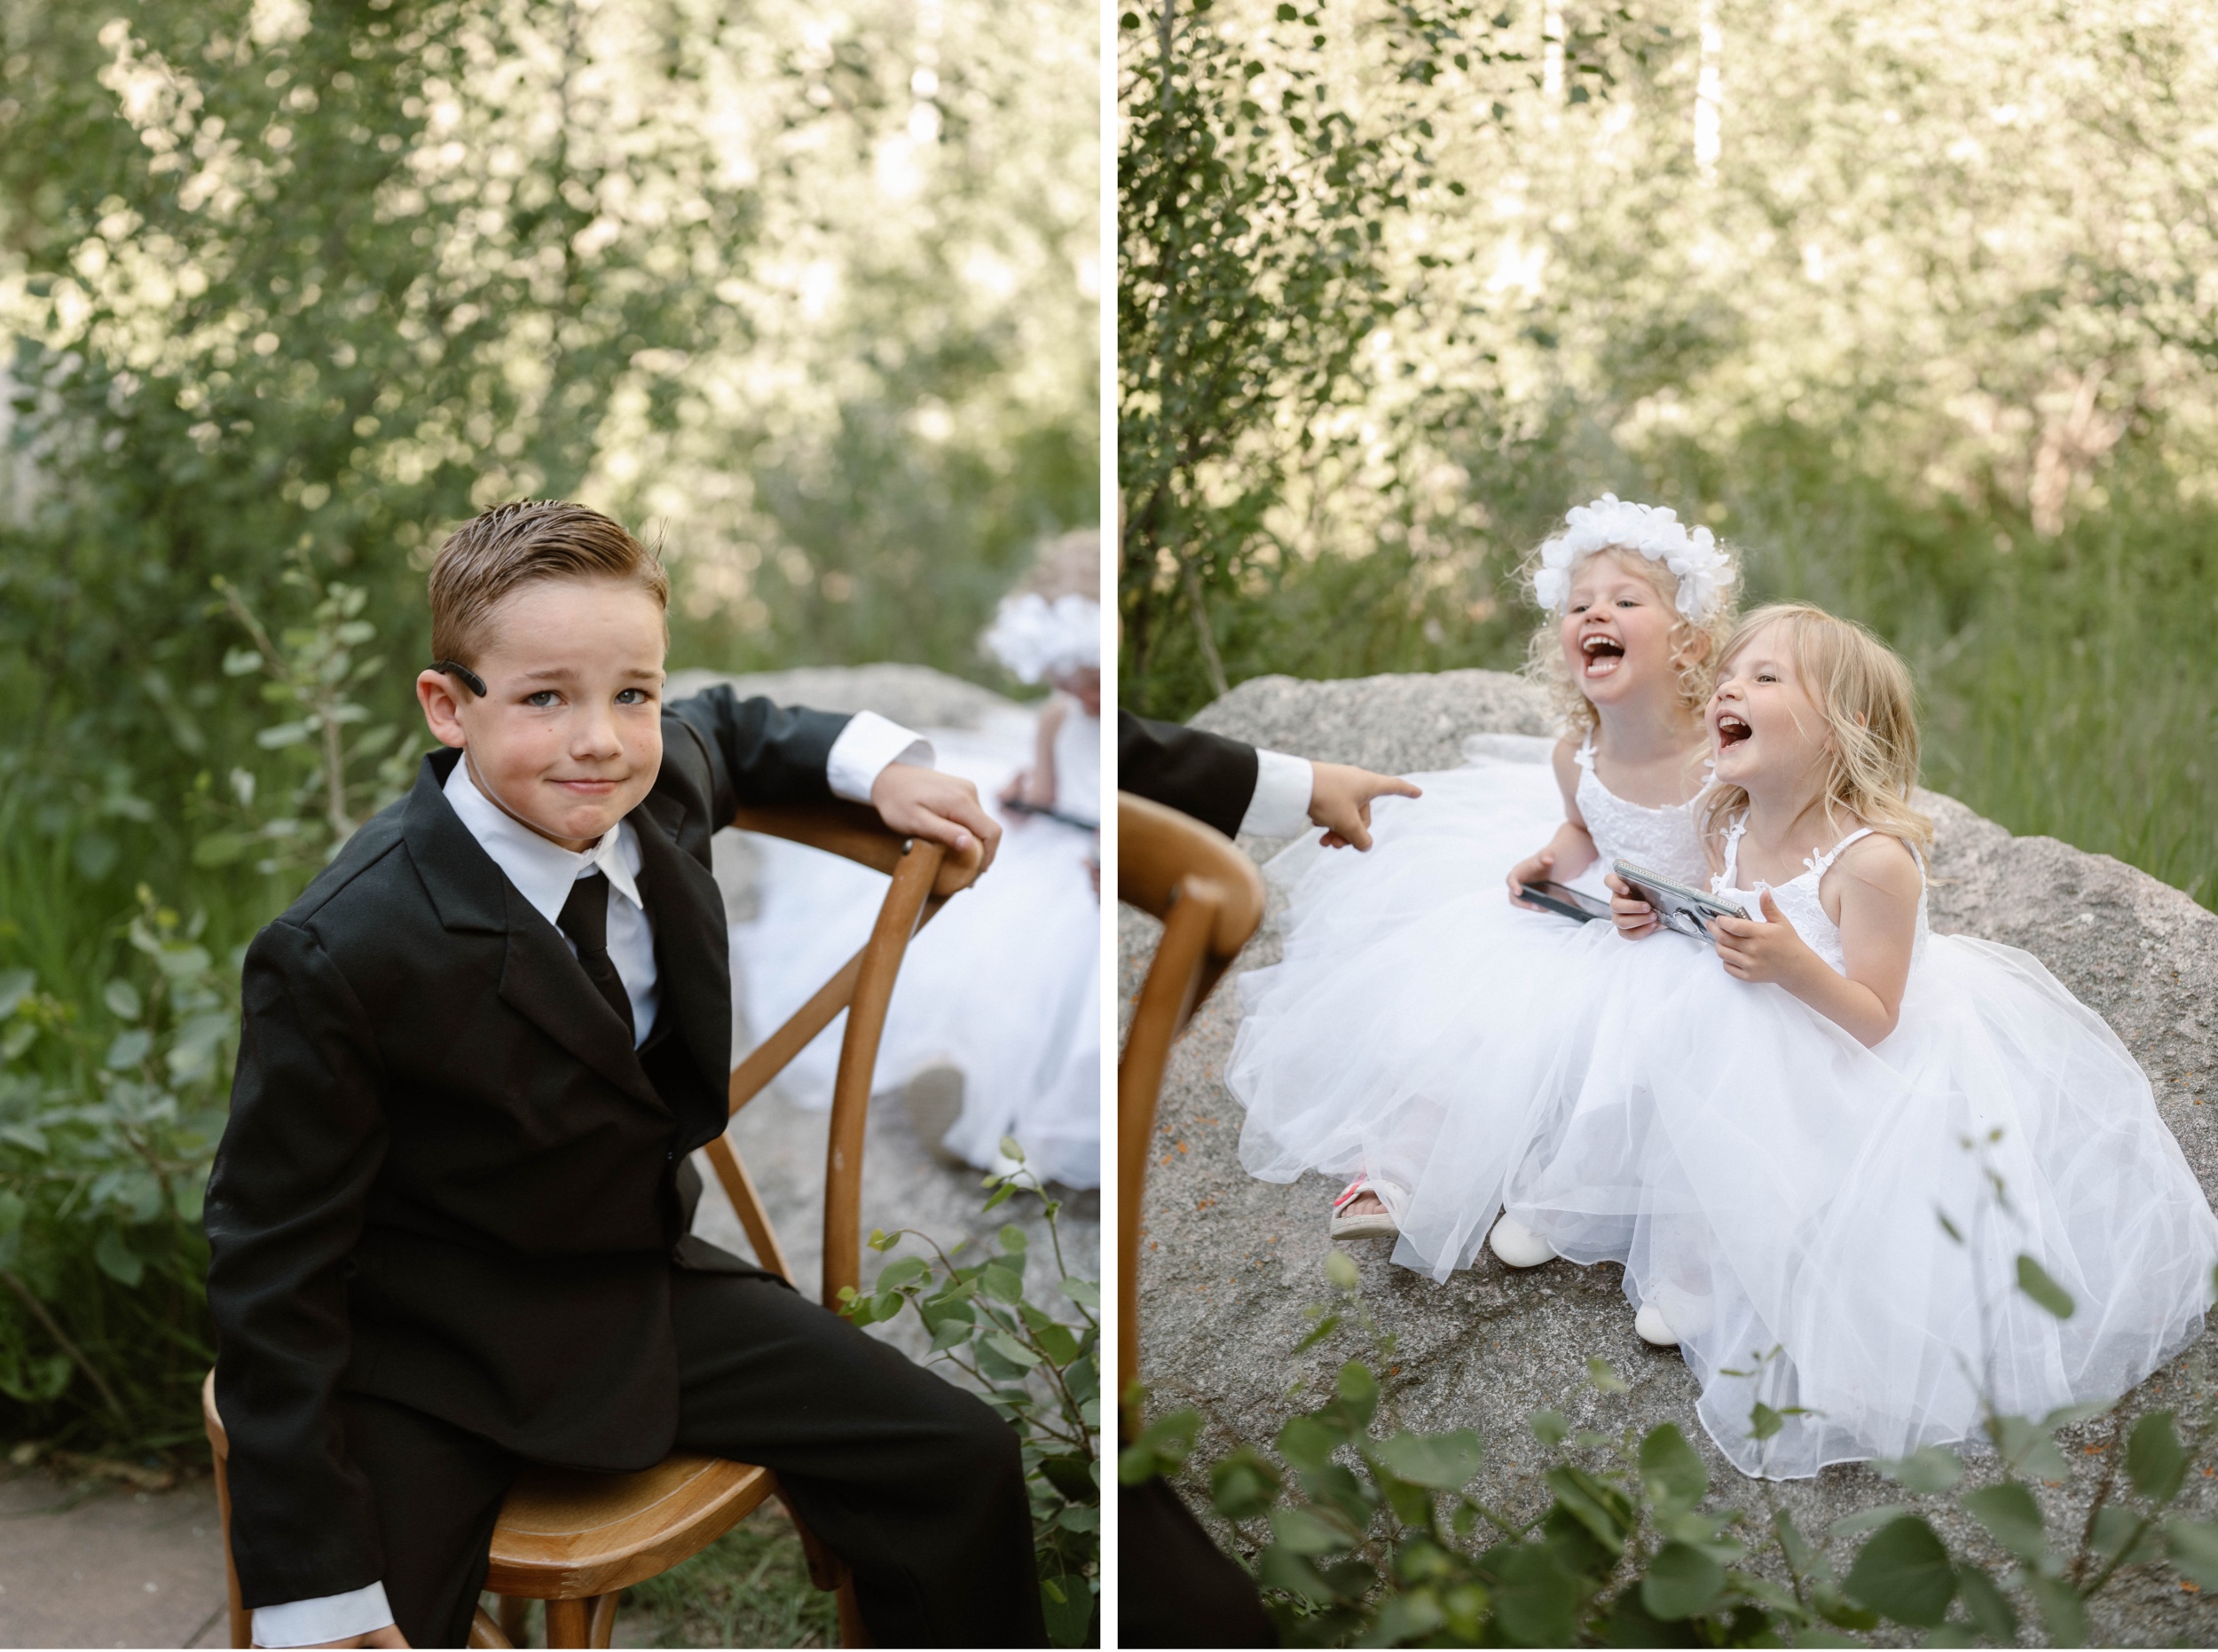 Candid wedding photos of guests at a wedding in Vail, Colorado. Photo by Colorado wedding photographer Ashley Joyce.